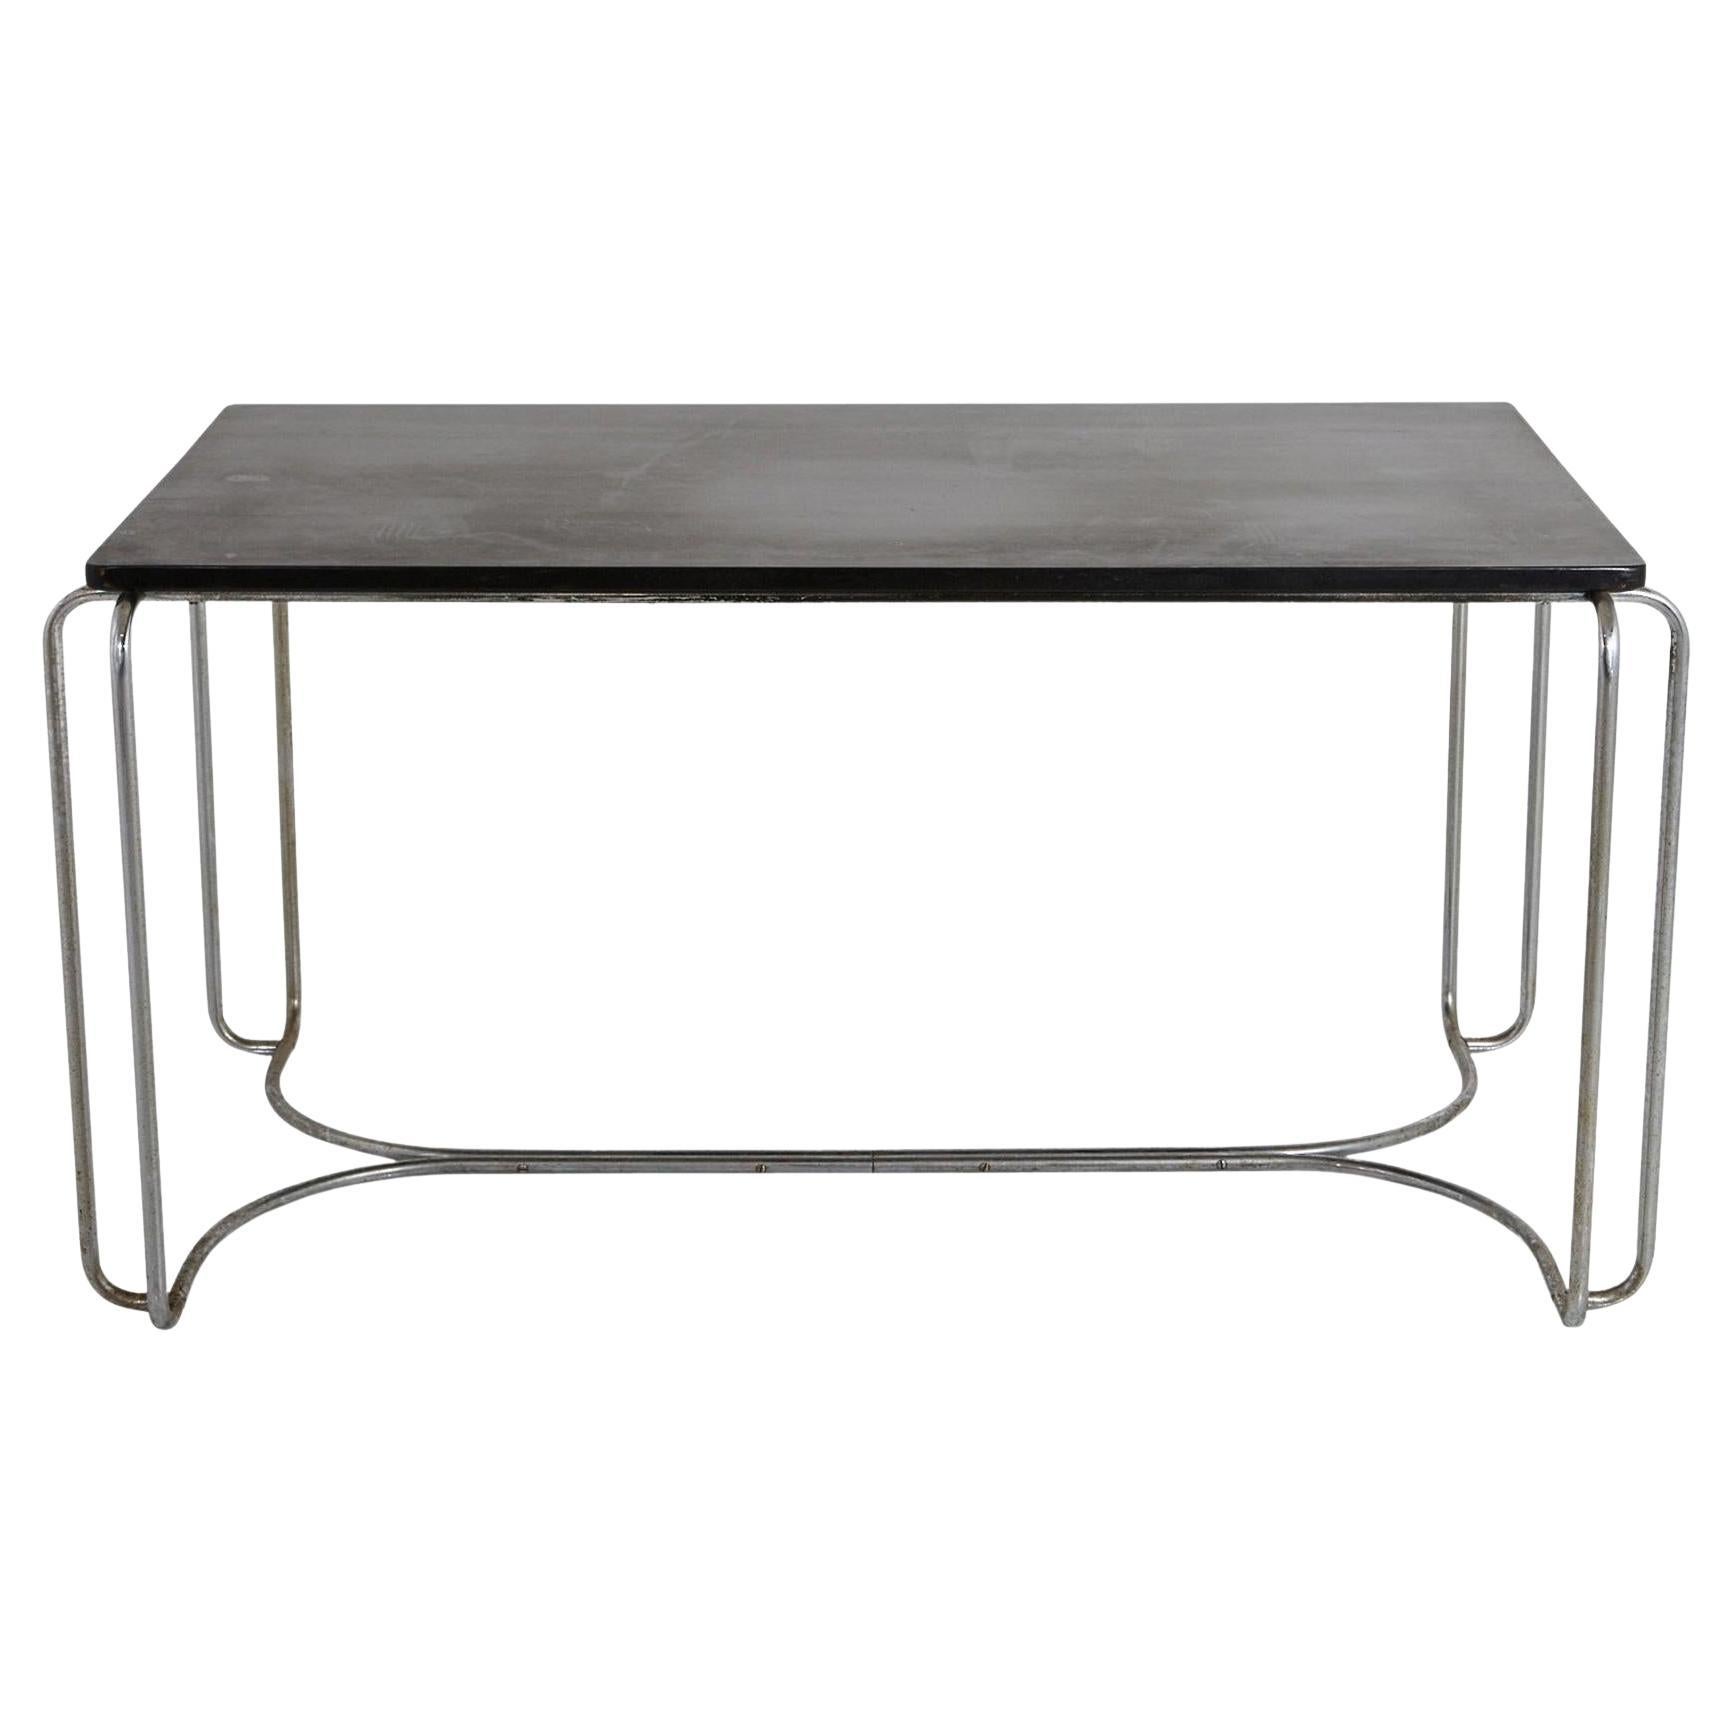 Art Deco Tubular Chrome Desk/Library Black Top Table Attrib to Wolfgang Hoffmann For Sale